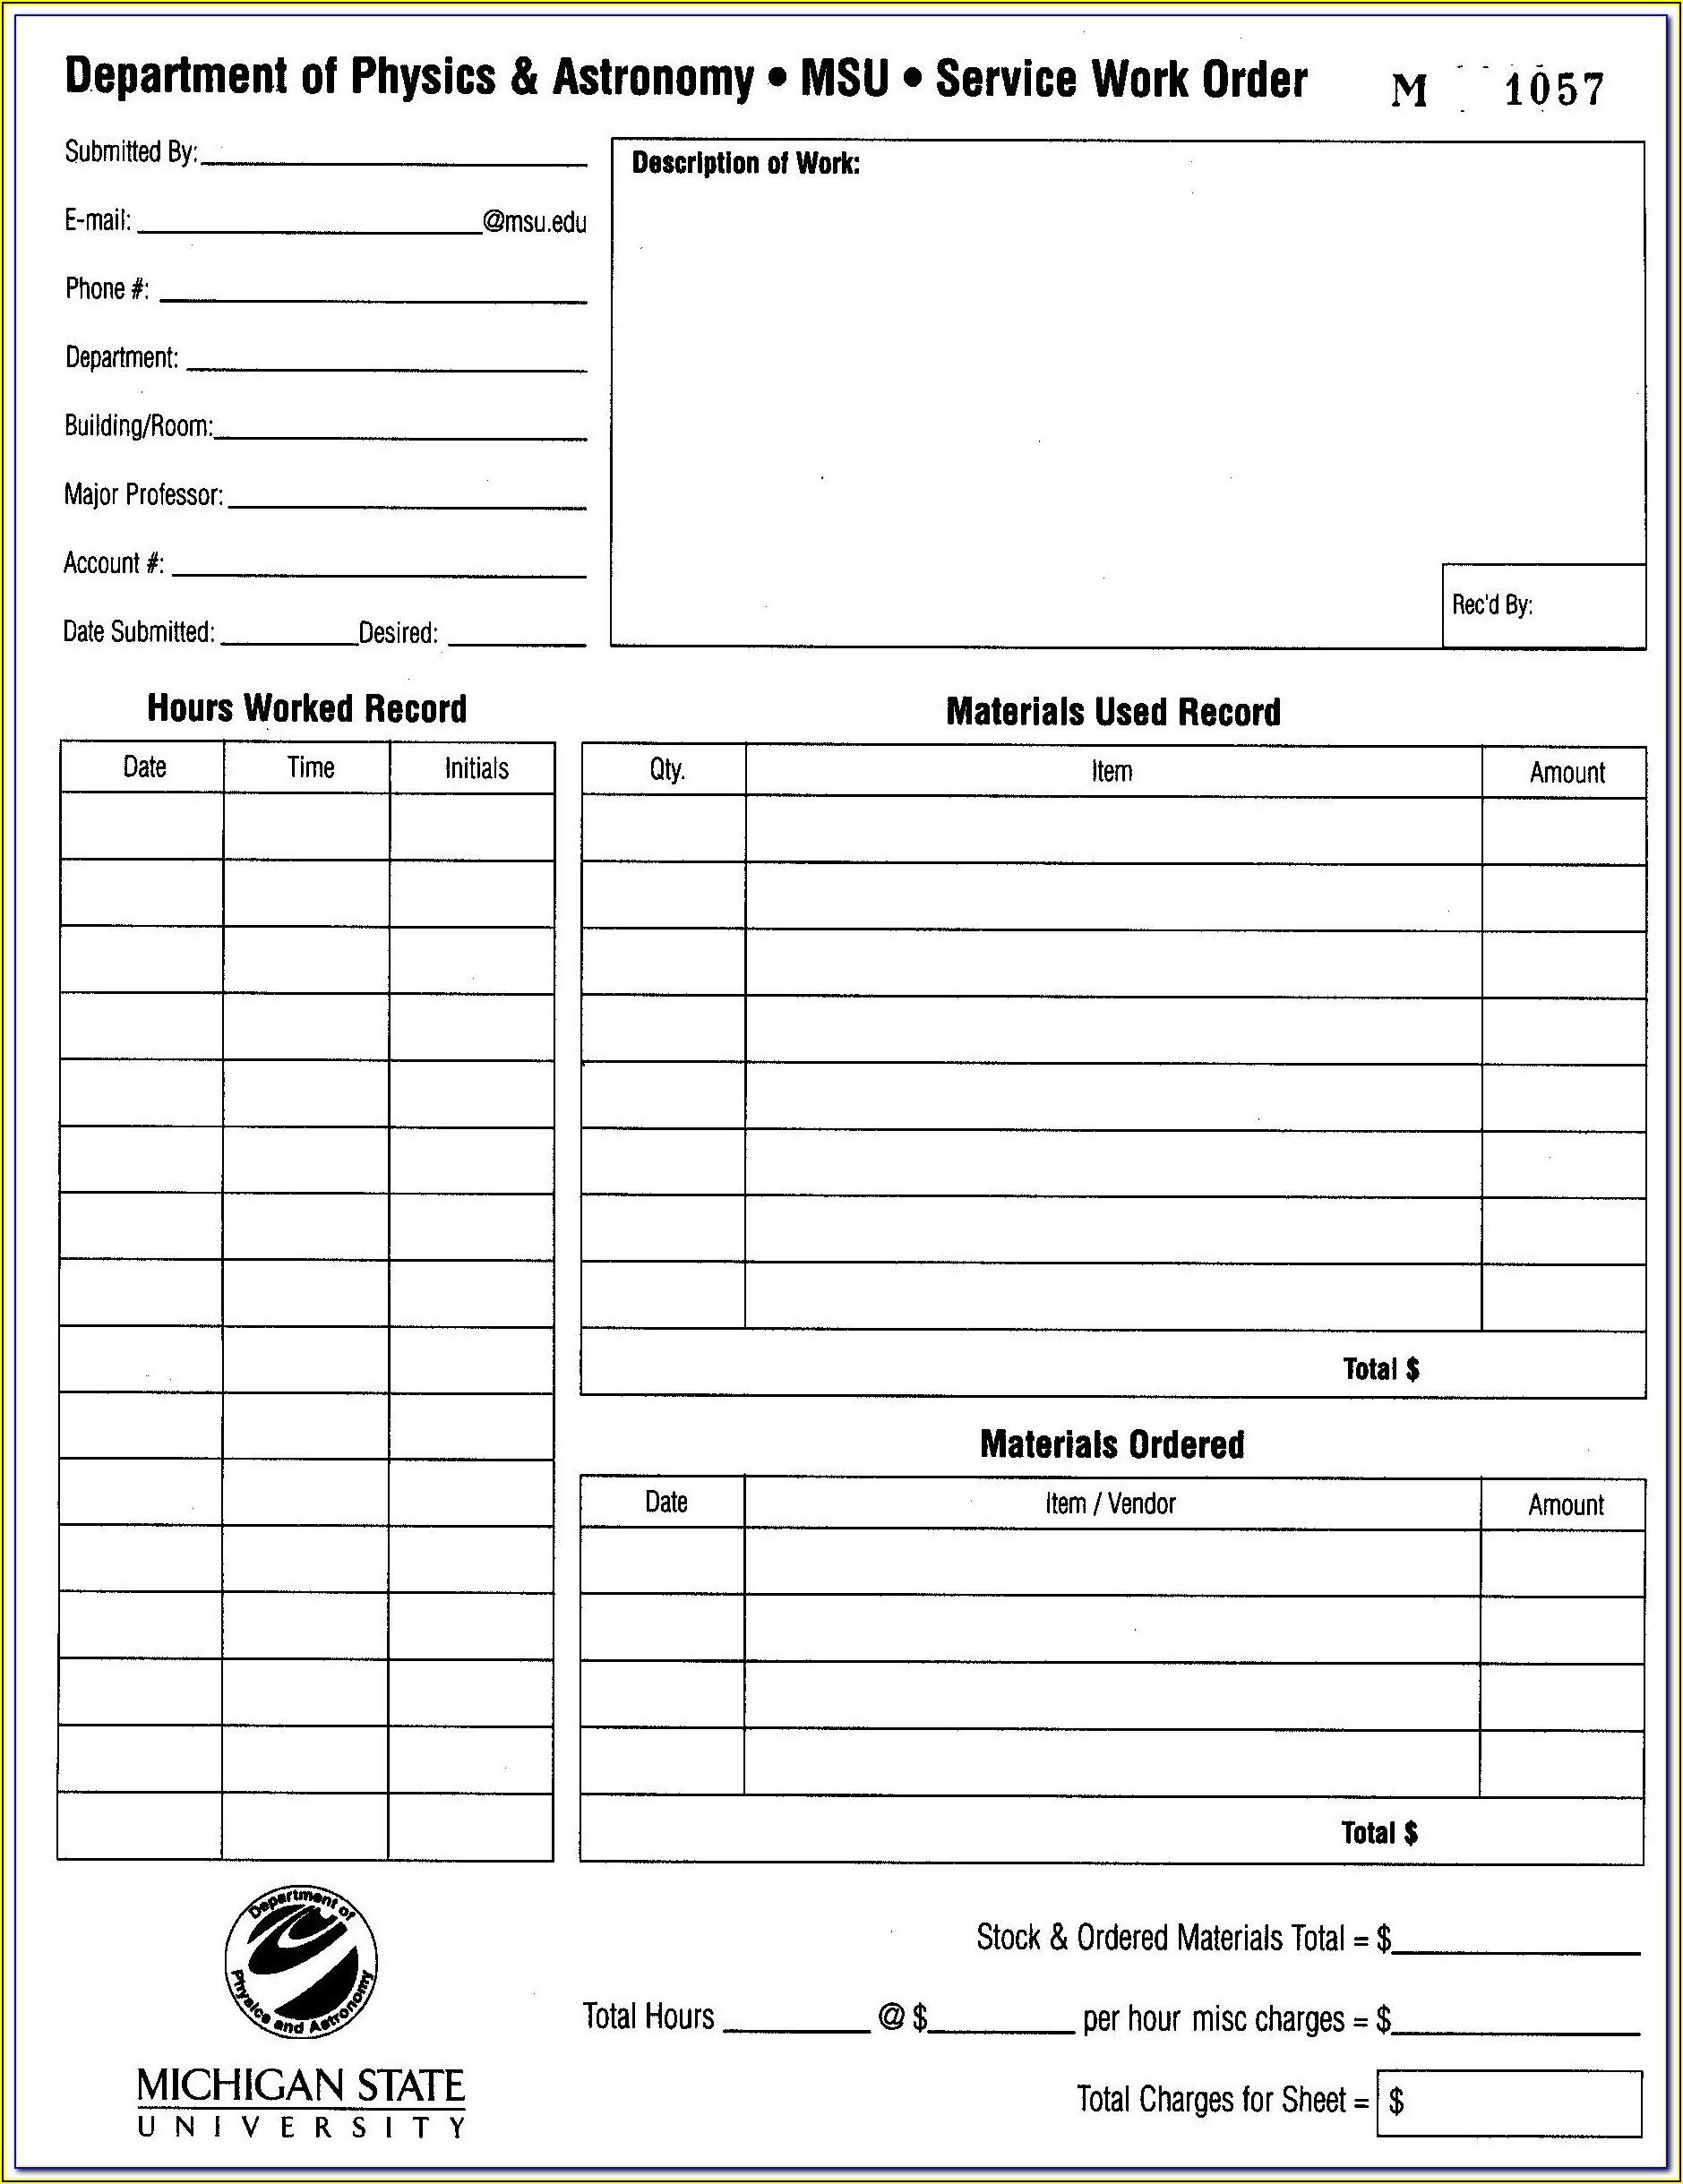 Free Printable Maintenance Work Order Forms